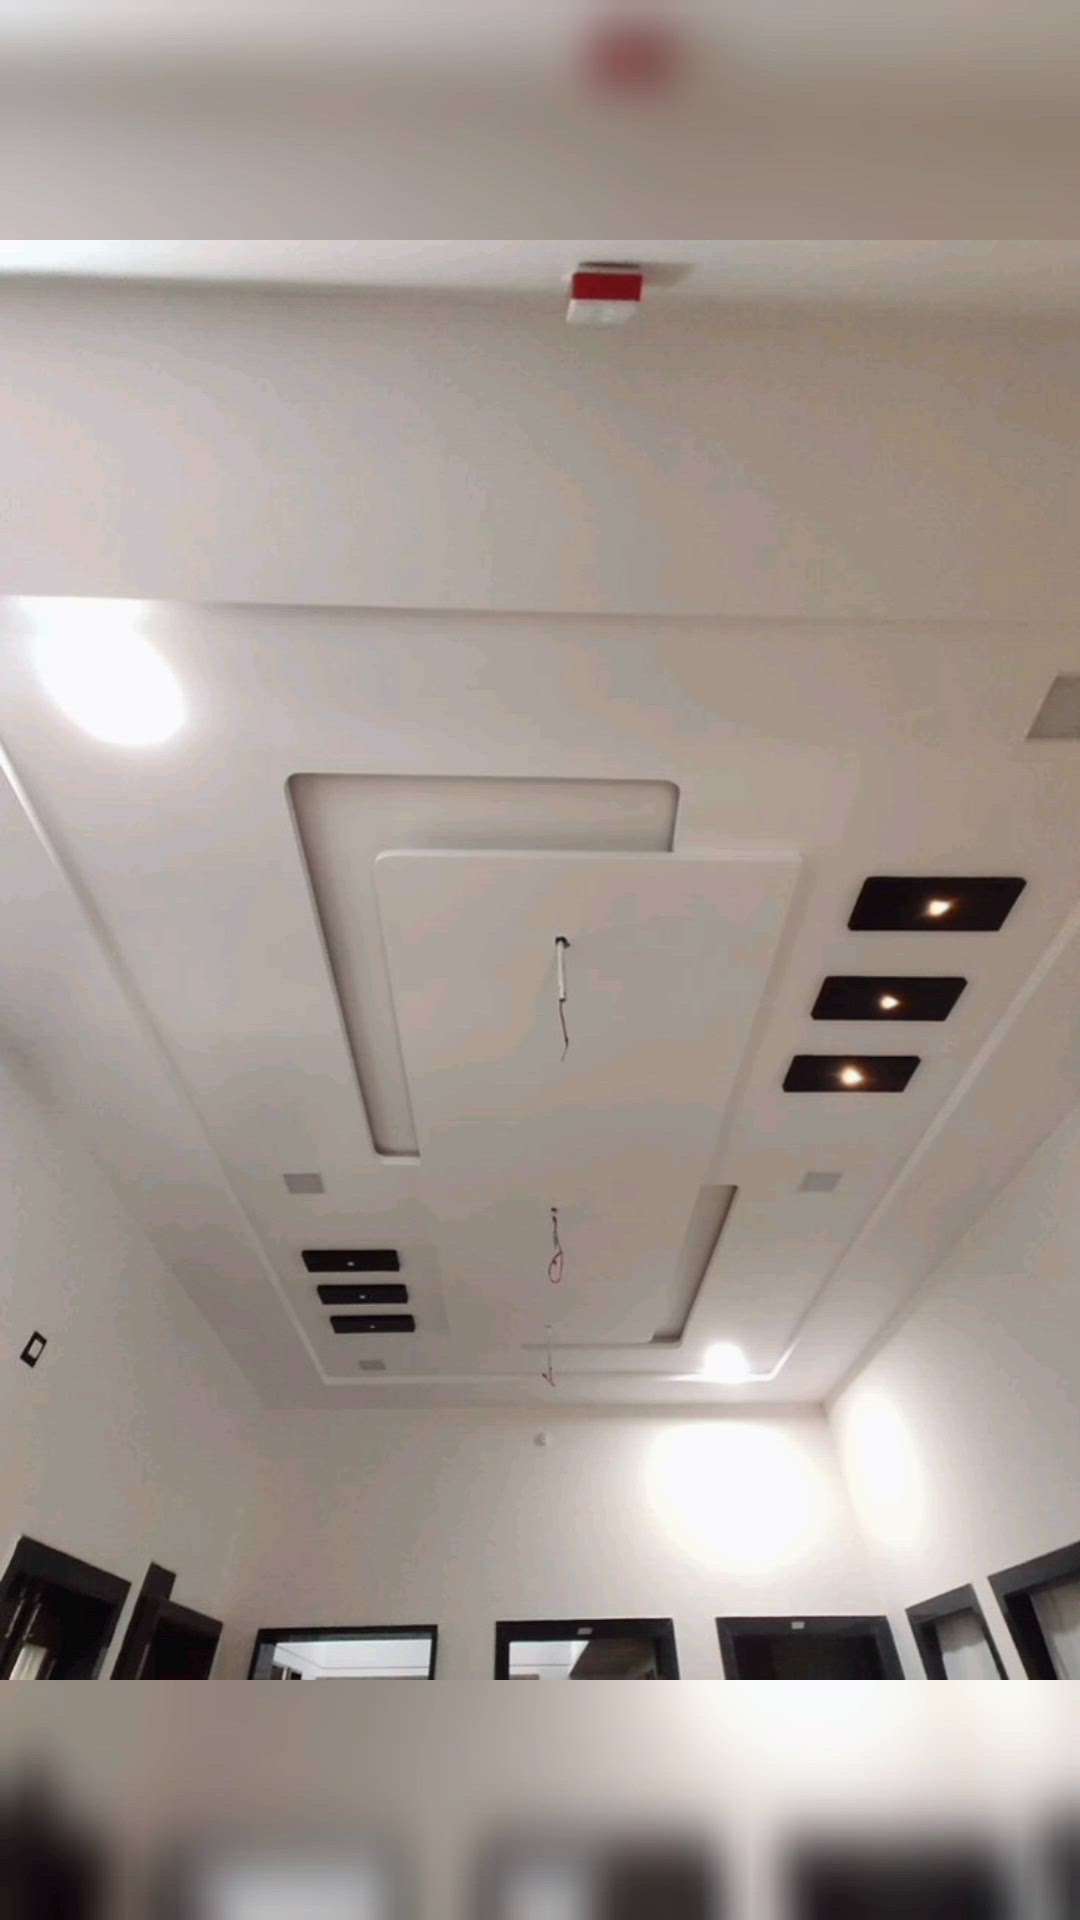 Best price home interior design solutions Noida extension
Best pop false ceiling
Gypsum ceiling
RV istorng 2+2 ka cite tails
PVC panel ceiling
Paint 🎨 pop and electic ⚡
Ke liye hame call kare 
7309139235